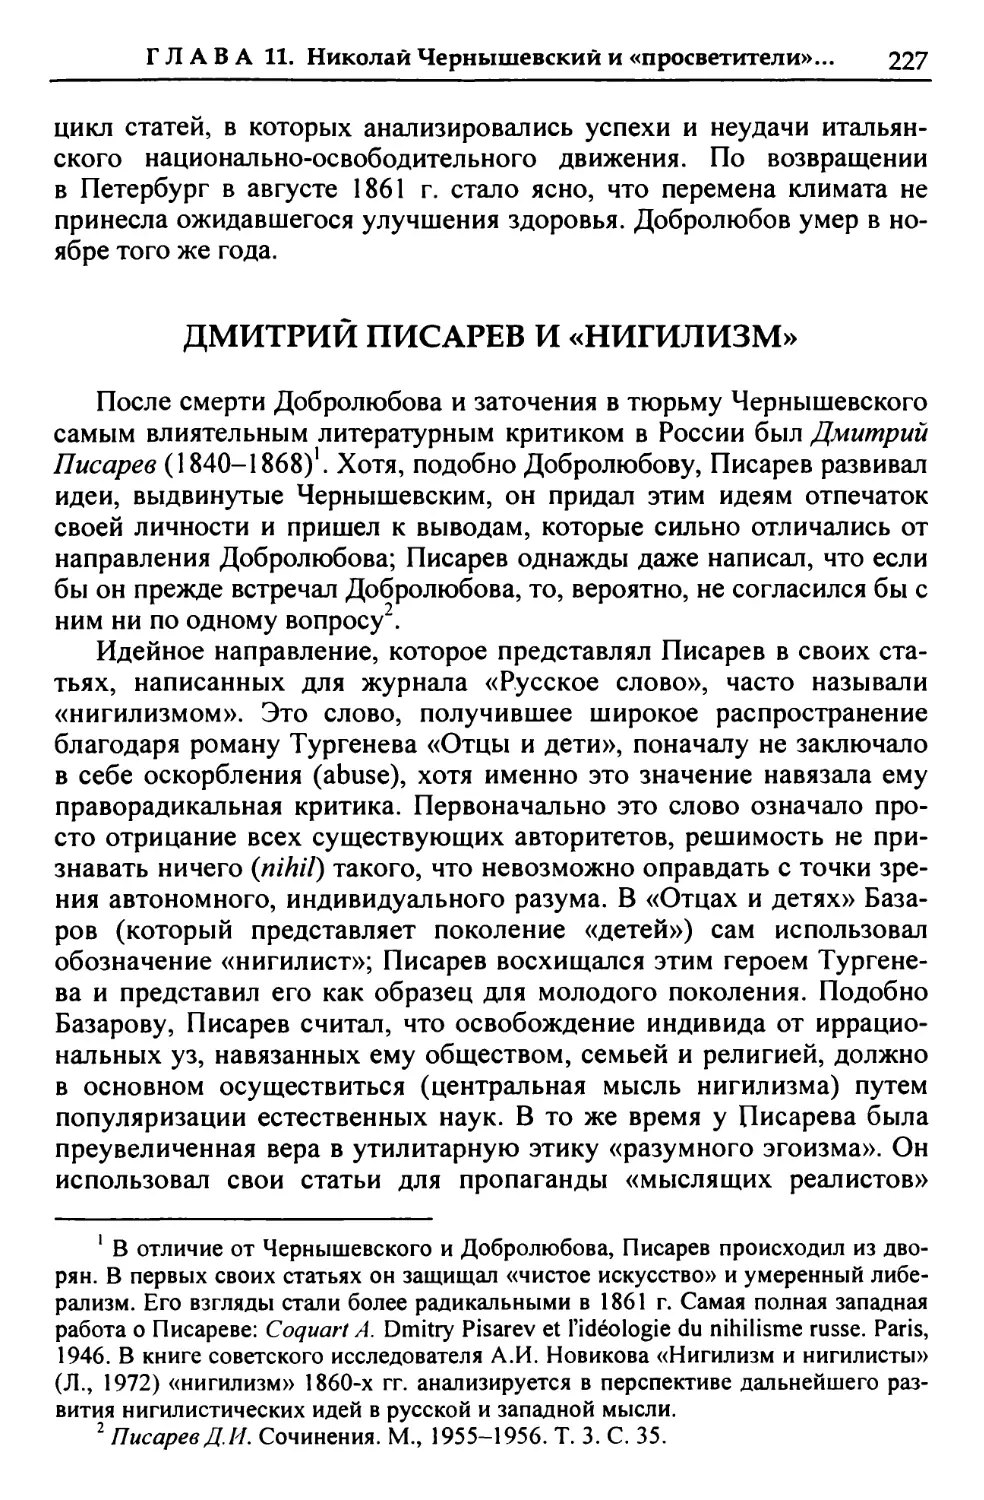 Дмитрий Писарев и «нигилизм»